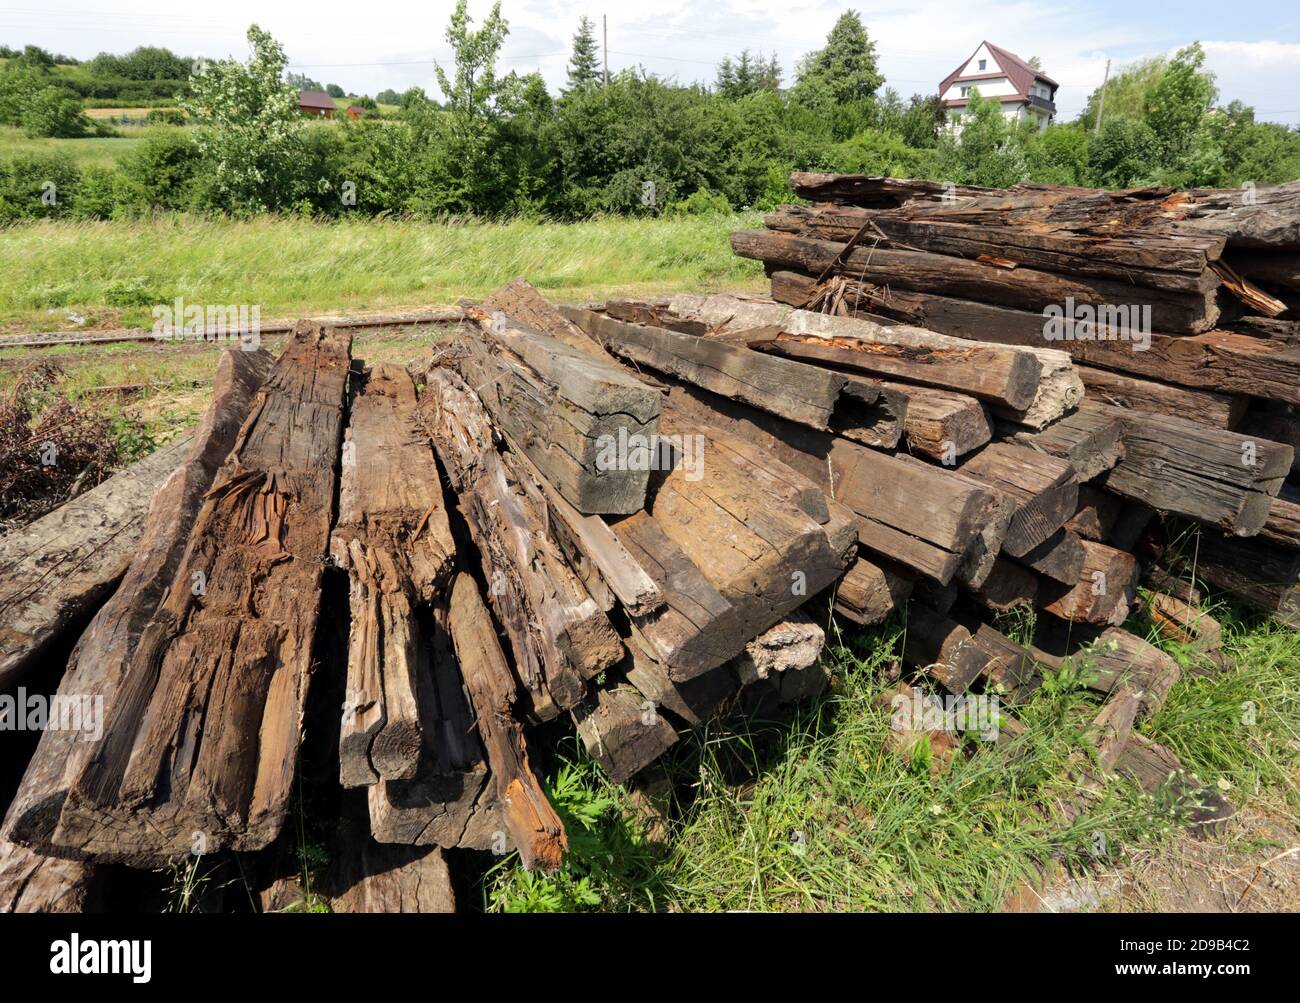 Dobra. Poland. The pile of worn old railwaily sleepers stacked near the railway track. Stock Photo